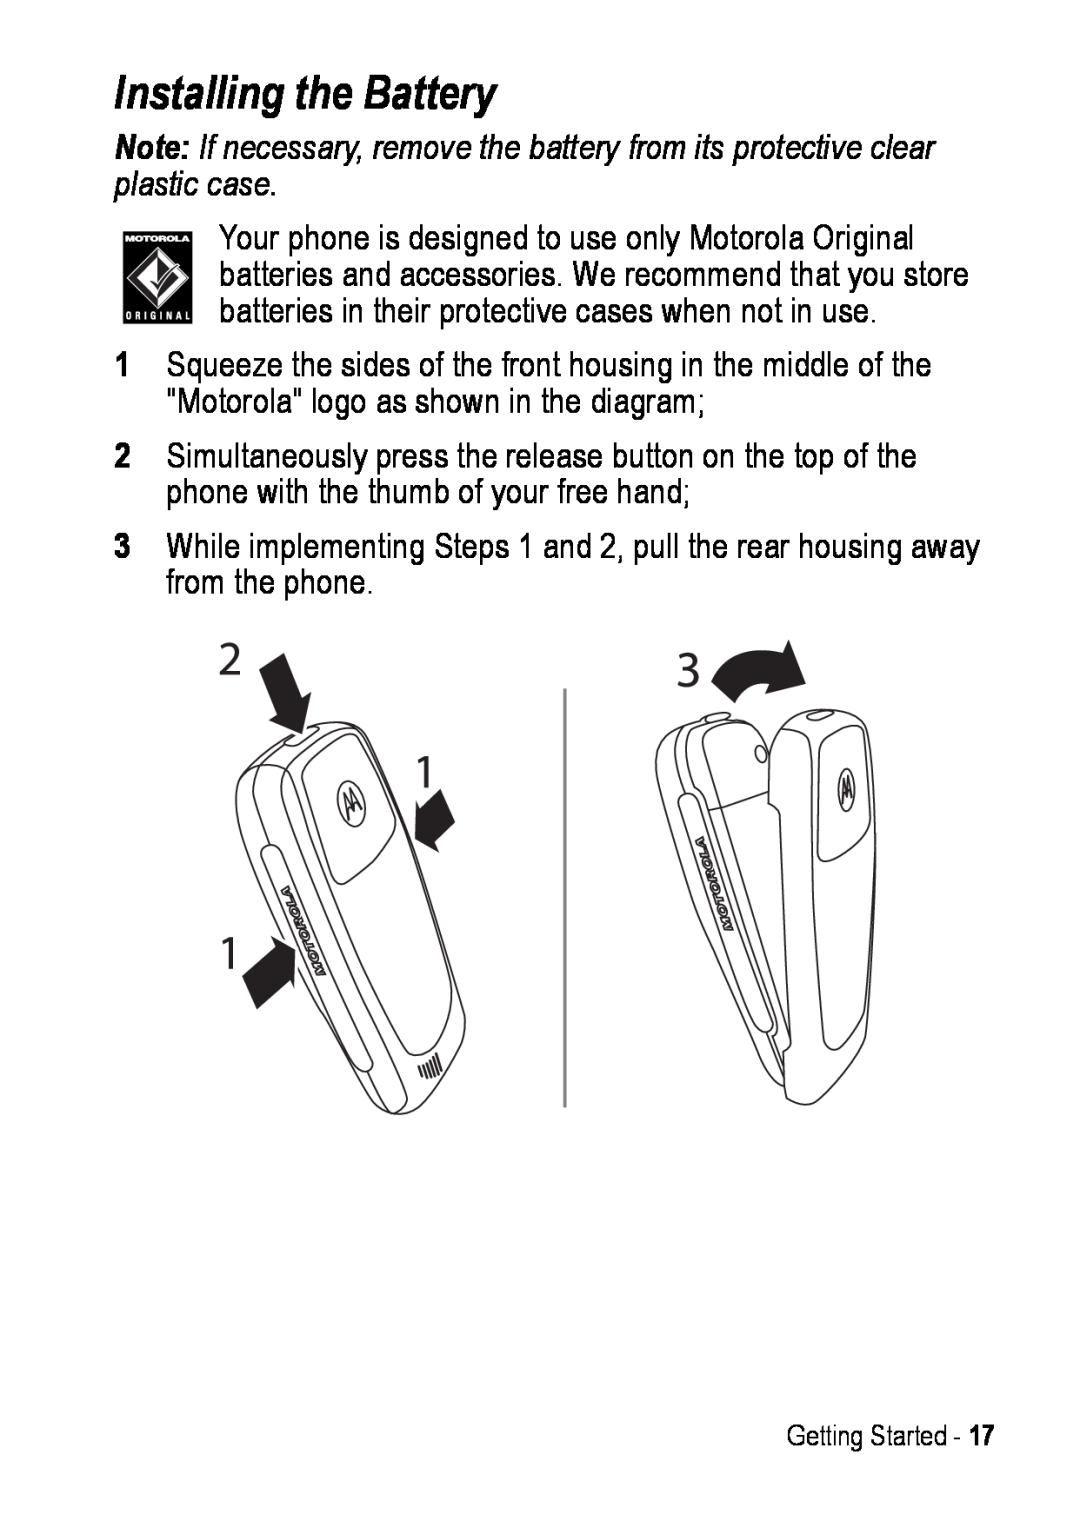 Motorola C390 manual Installing the Battery 